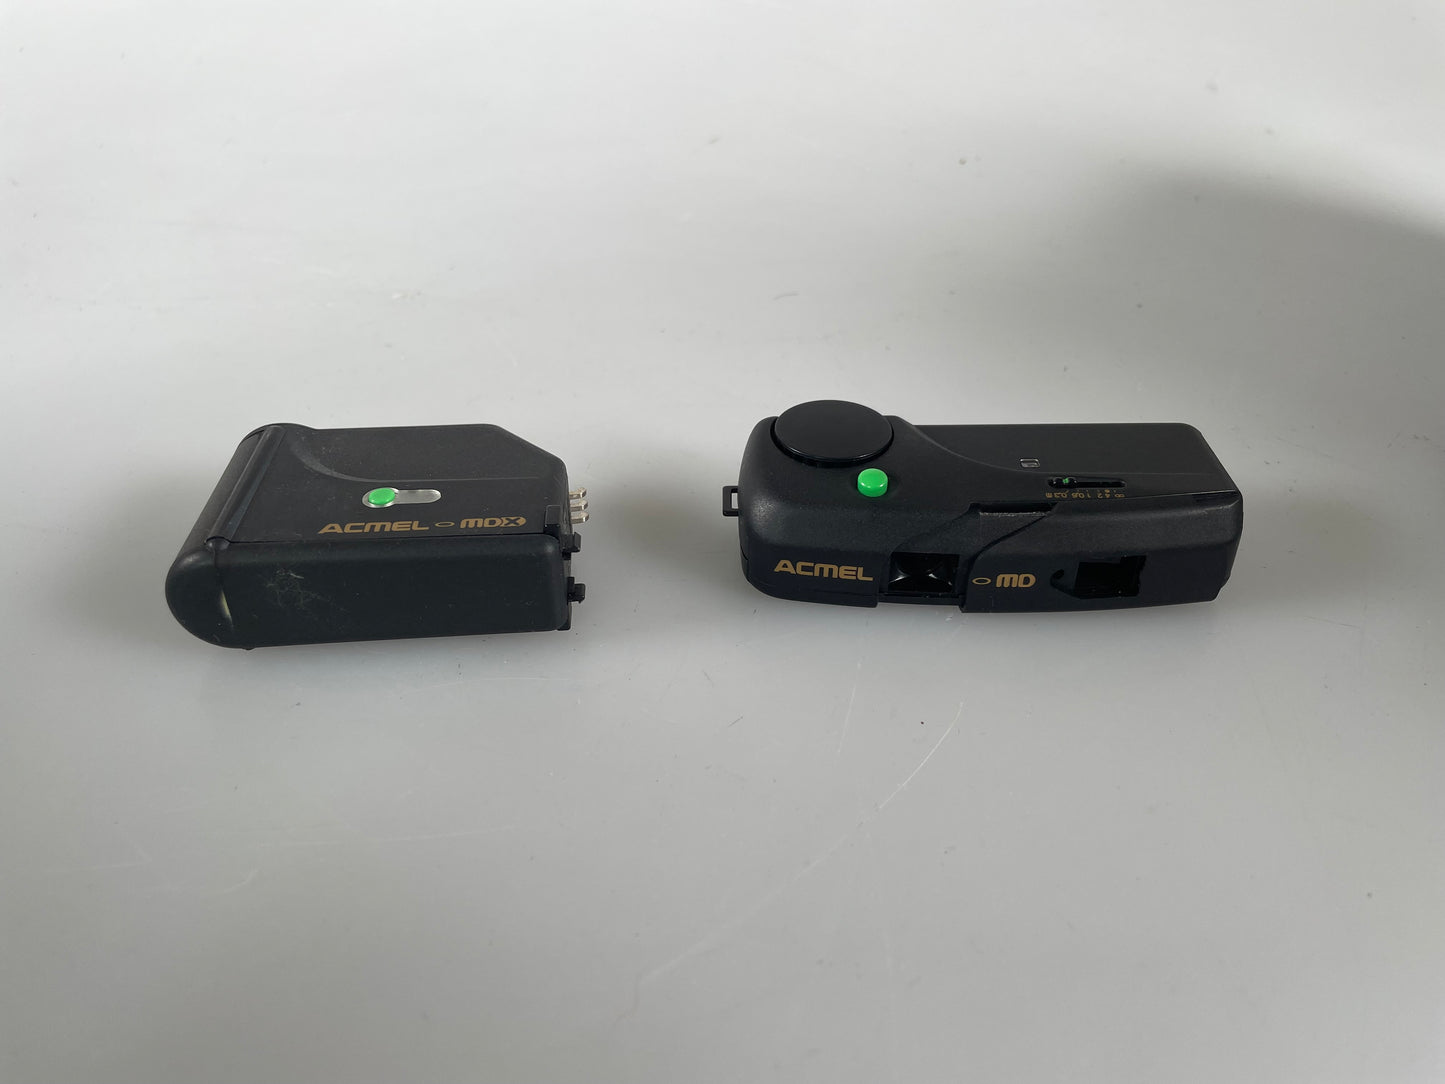 Acmel MDx Subminiature Camera w/ Flash Case